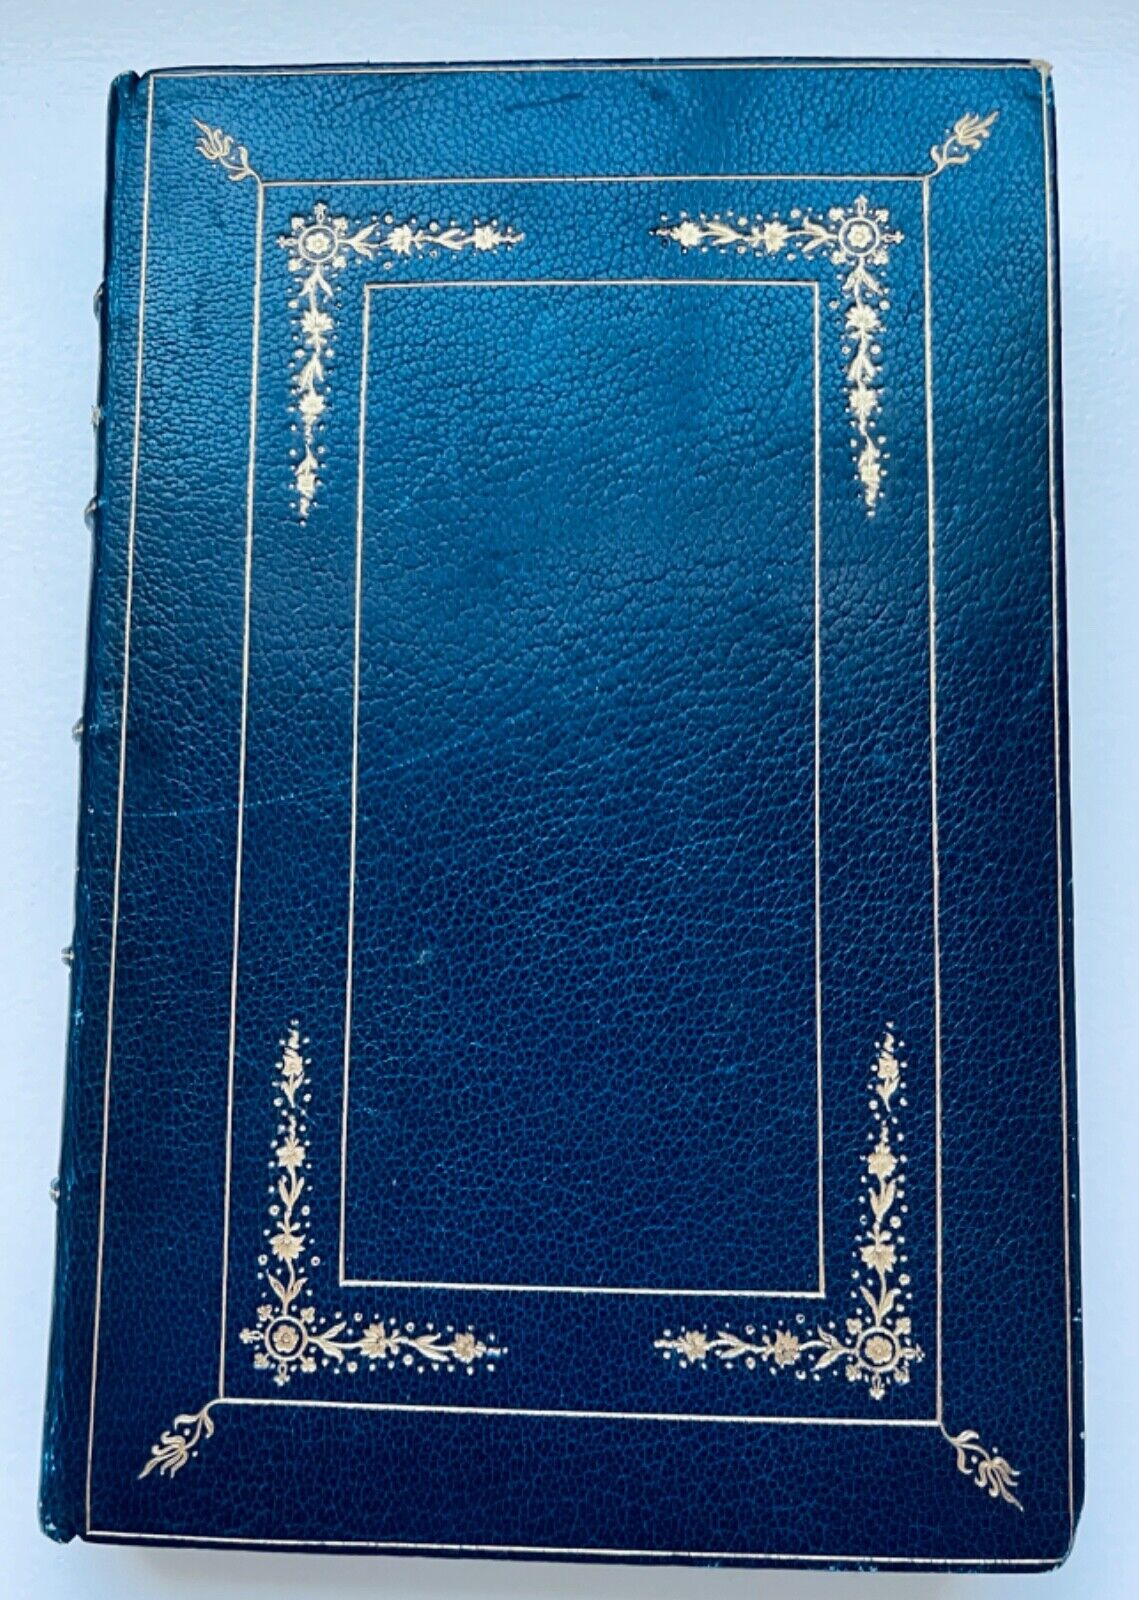 Scouting for Boys Original  1908 Handbook 1st Editon